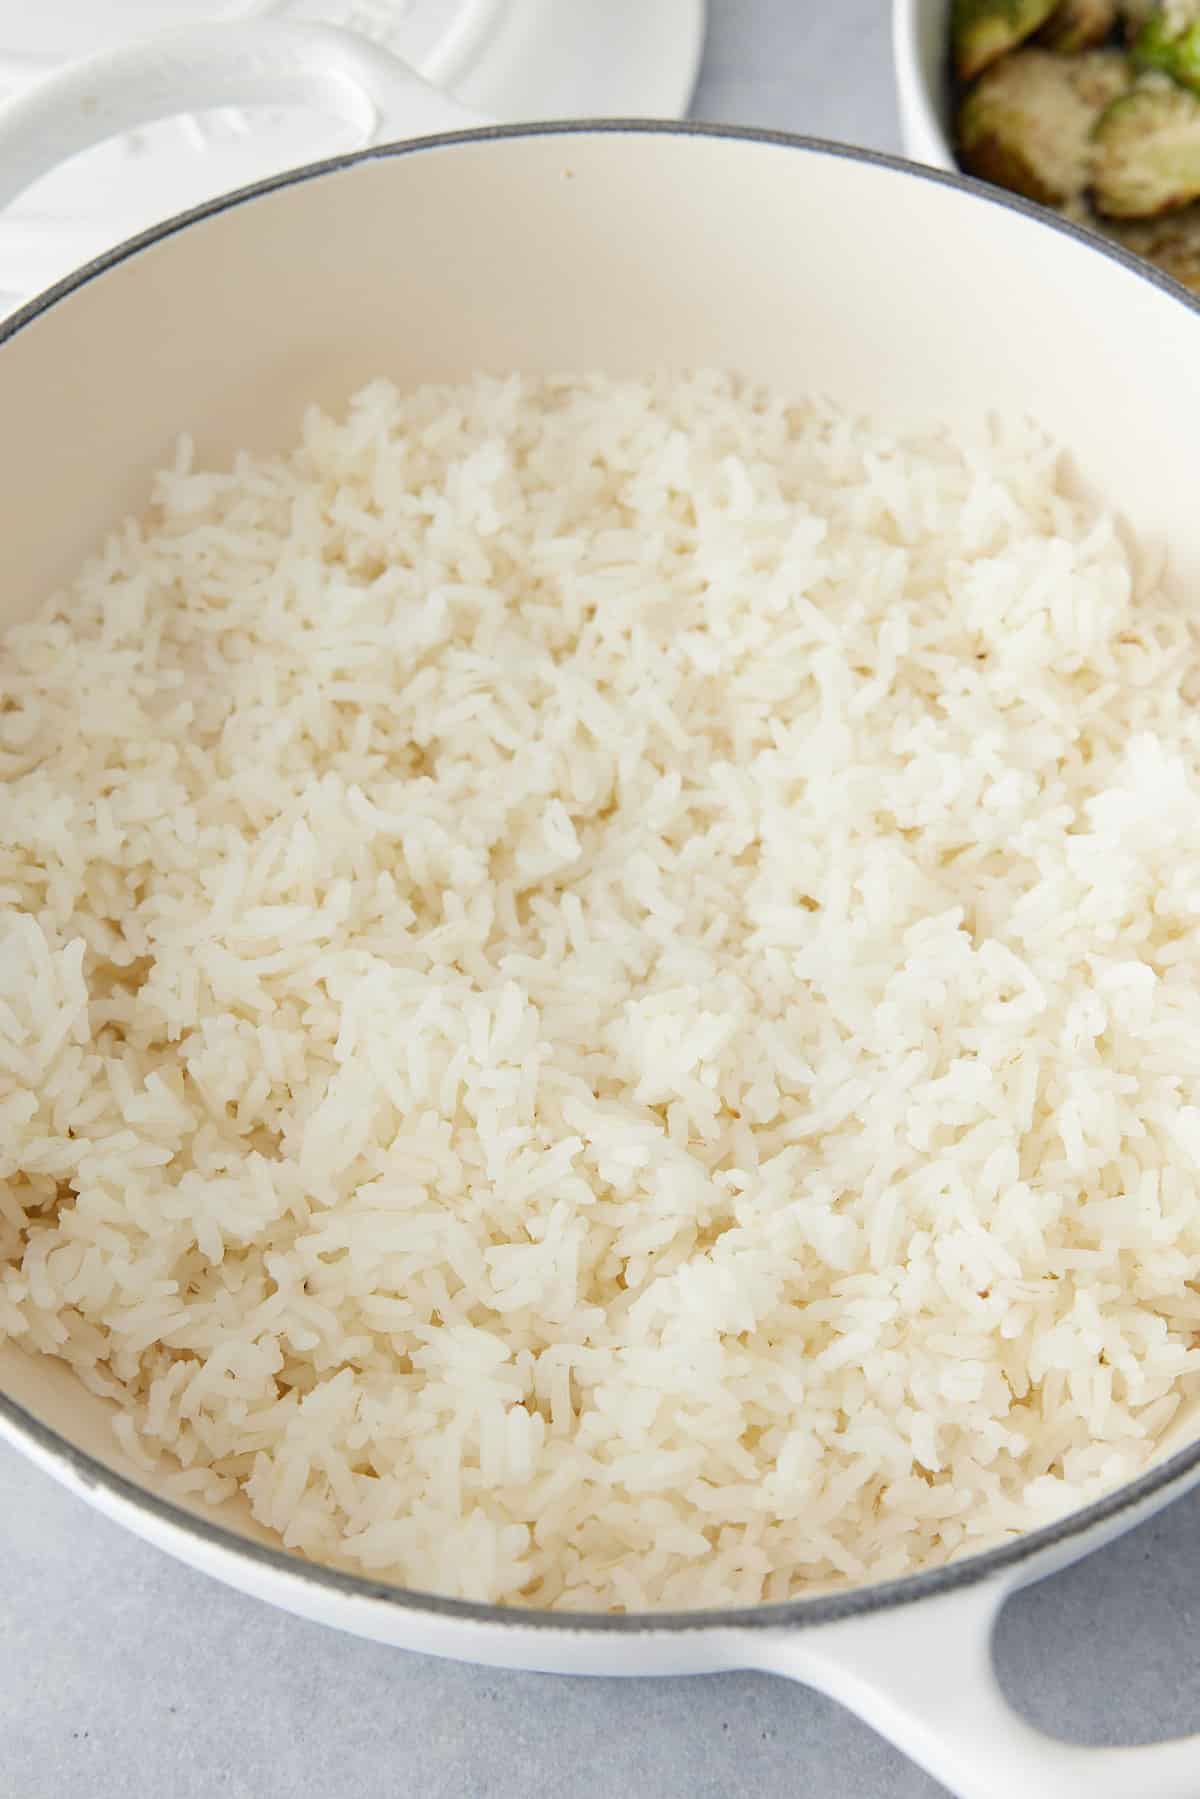 dutch oven full of baked rice